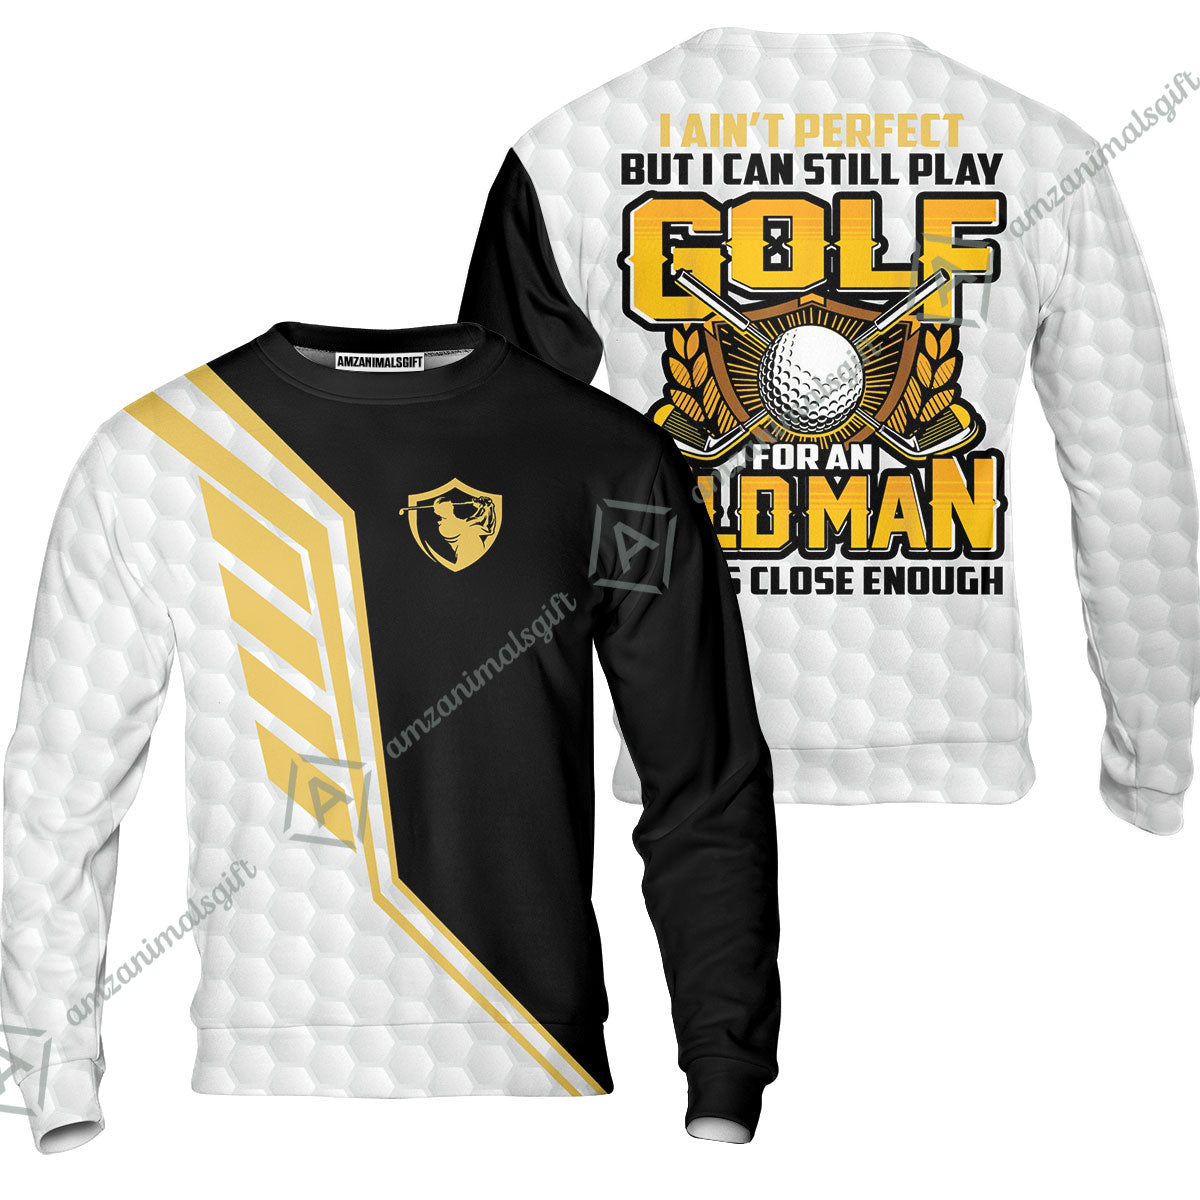 Golf Sweatshirt - I Ain't Perfect But I Can Still Play Golf Sweatshirt,  Black And White Golfing Shirt